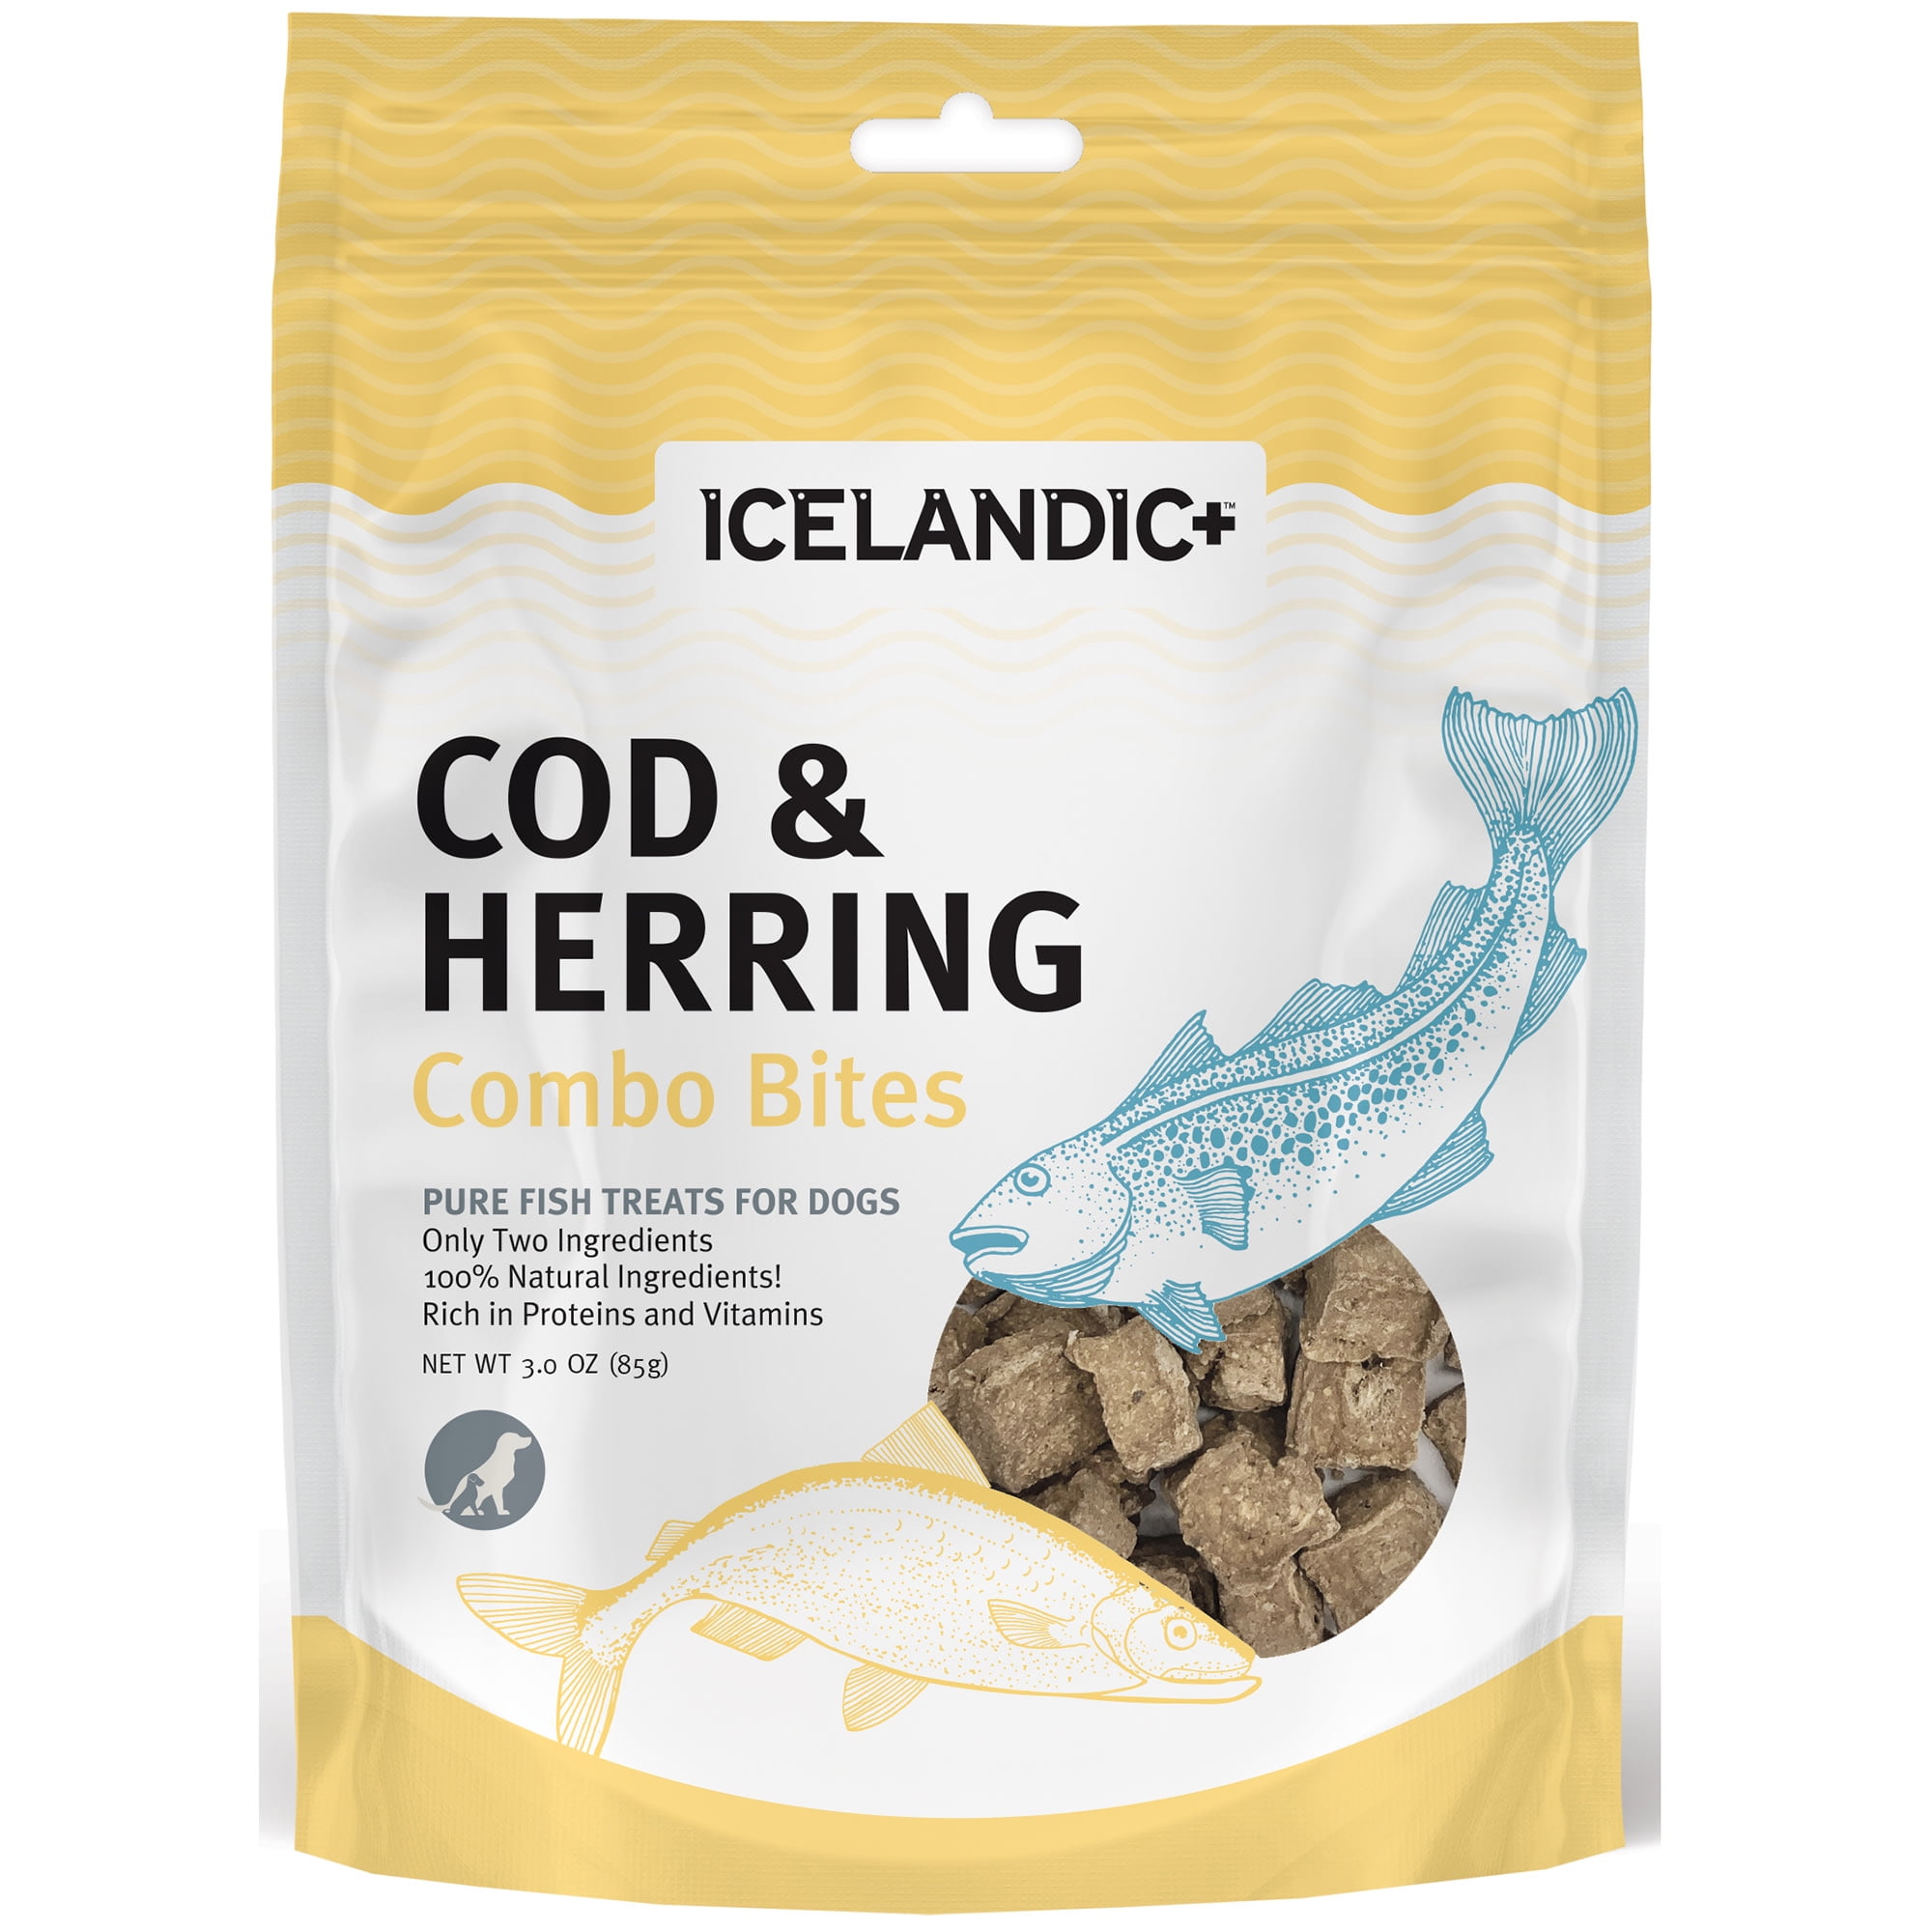 Ih82916 3.52 Oz Cod & Herring Combo Bites Fish Dog Treat Bag